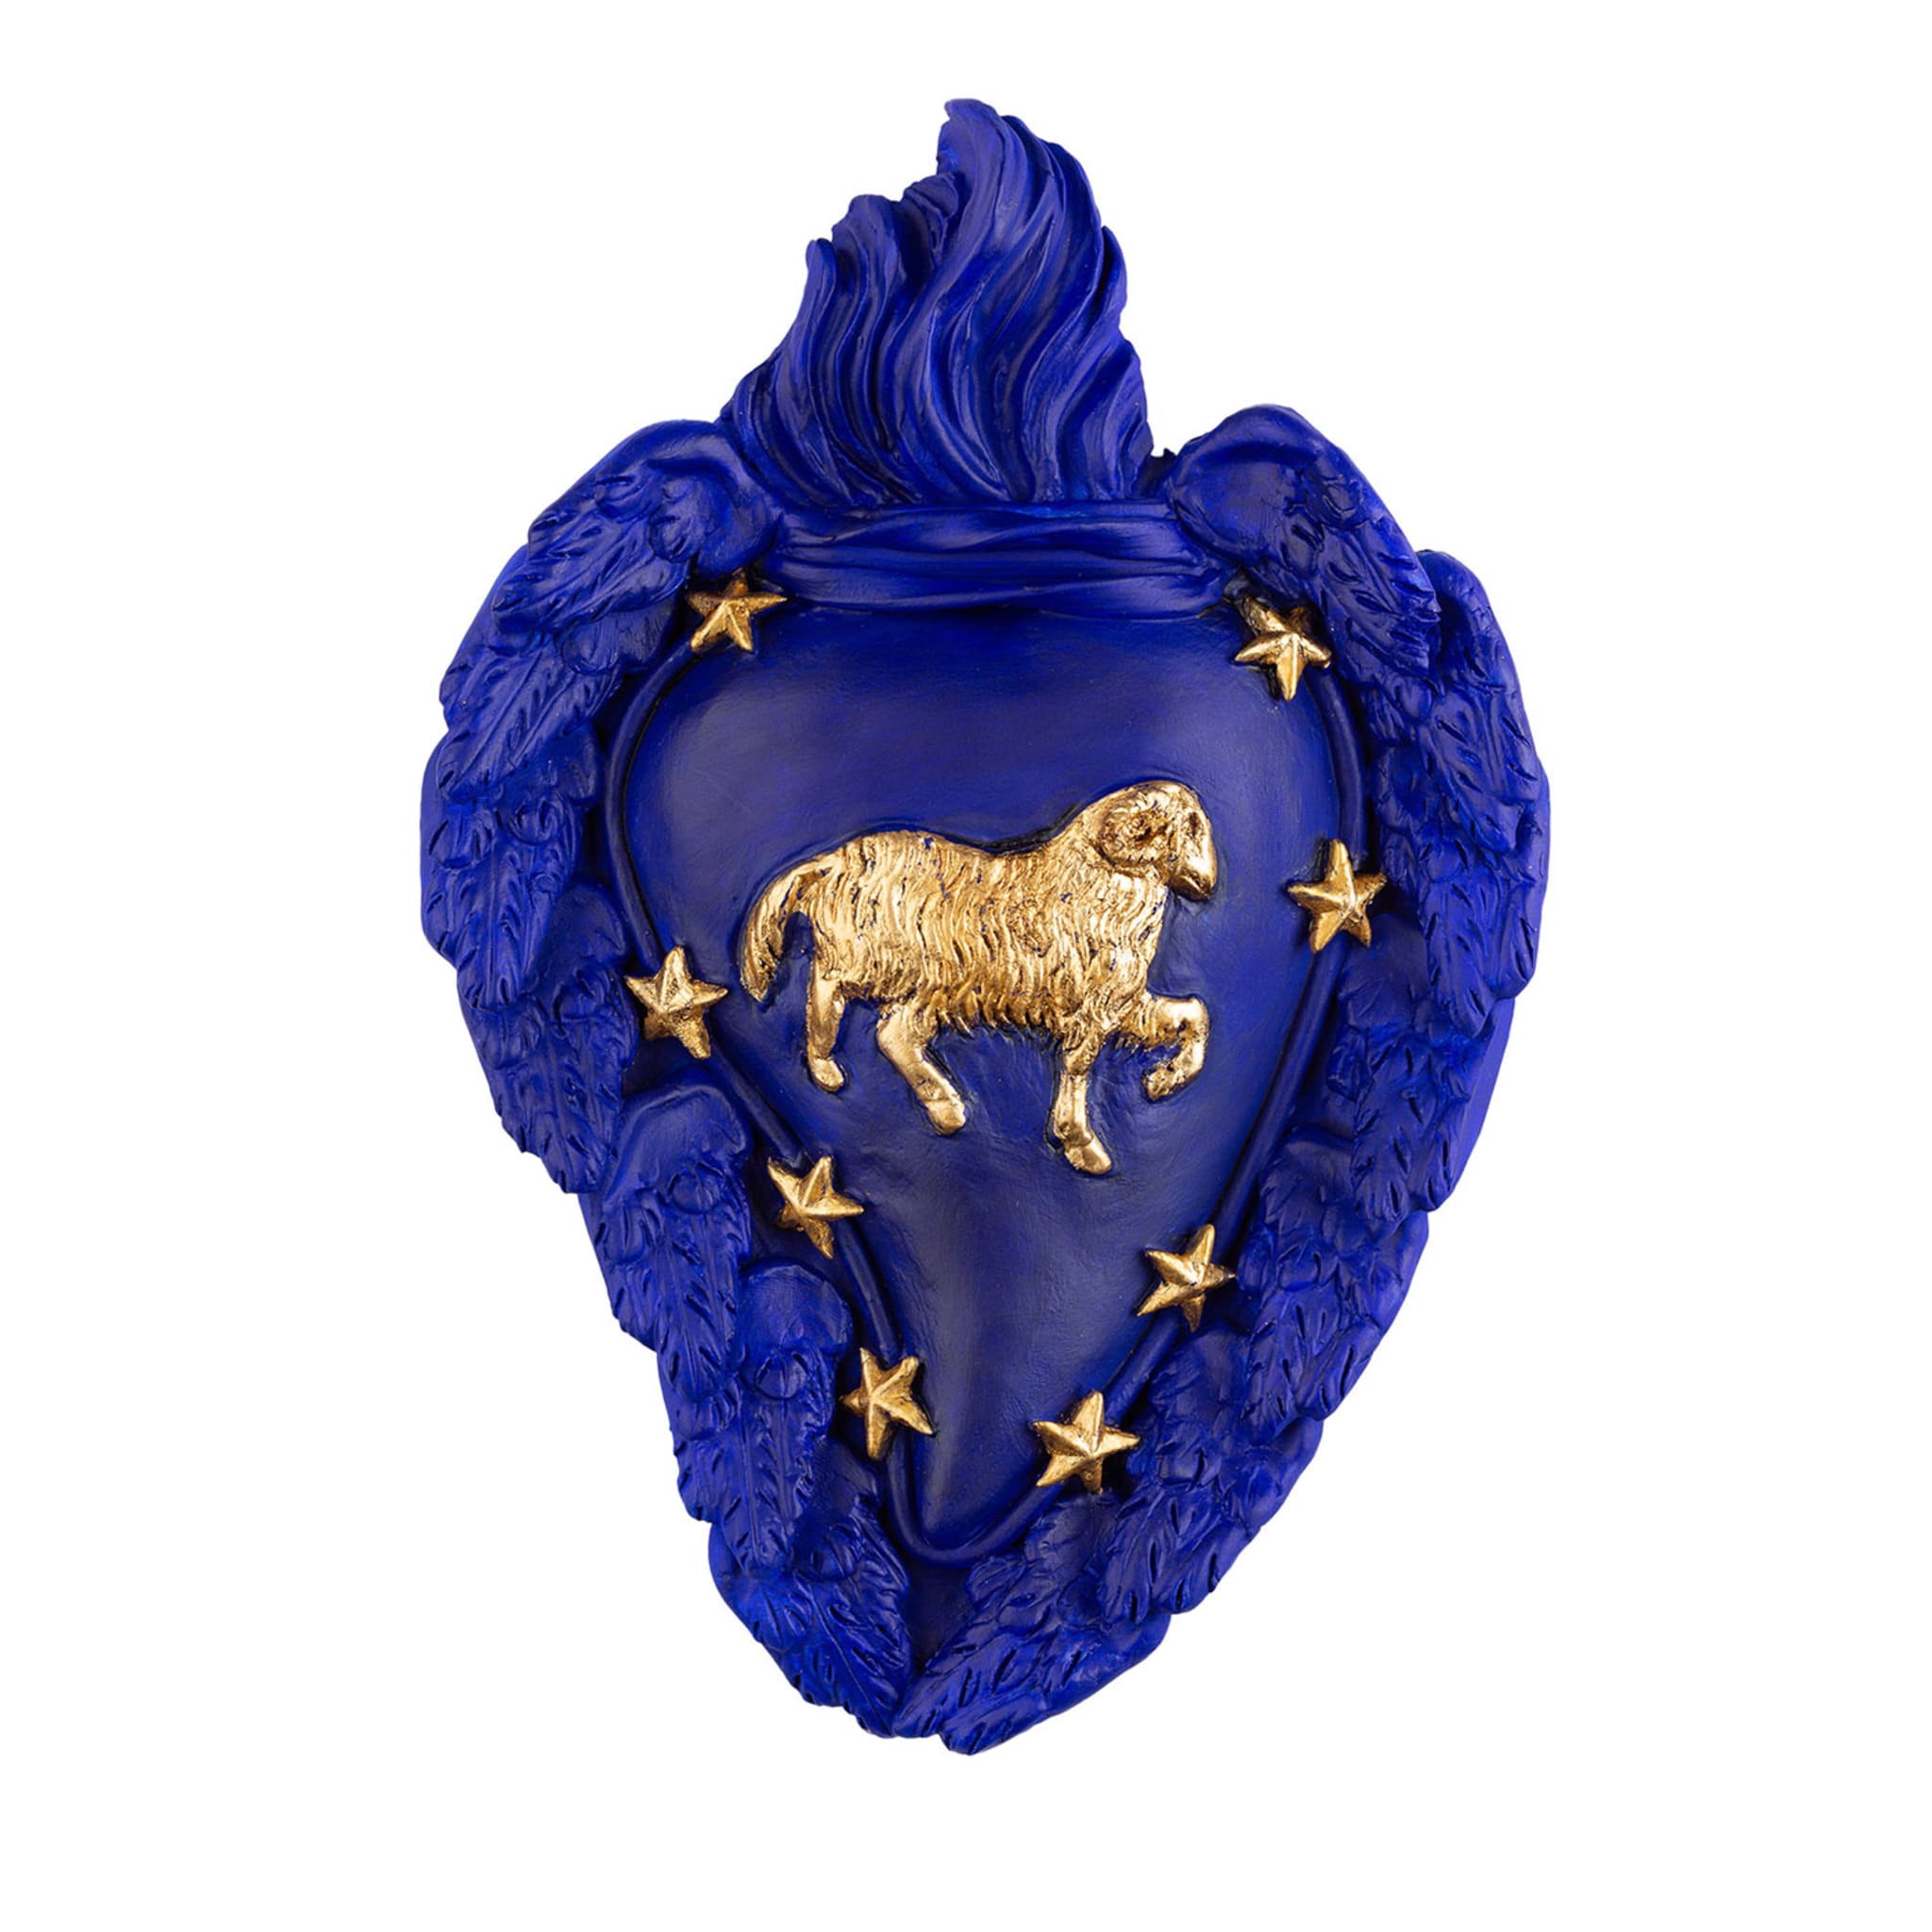 Zodiaco Aries Ceramic Heart - Main view